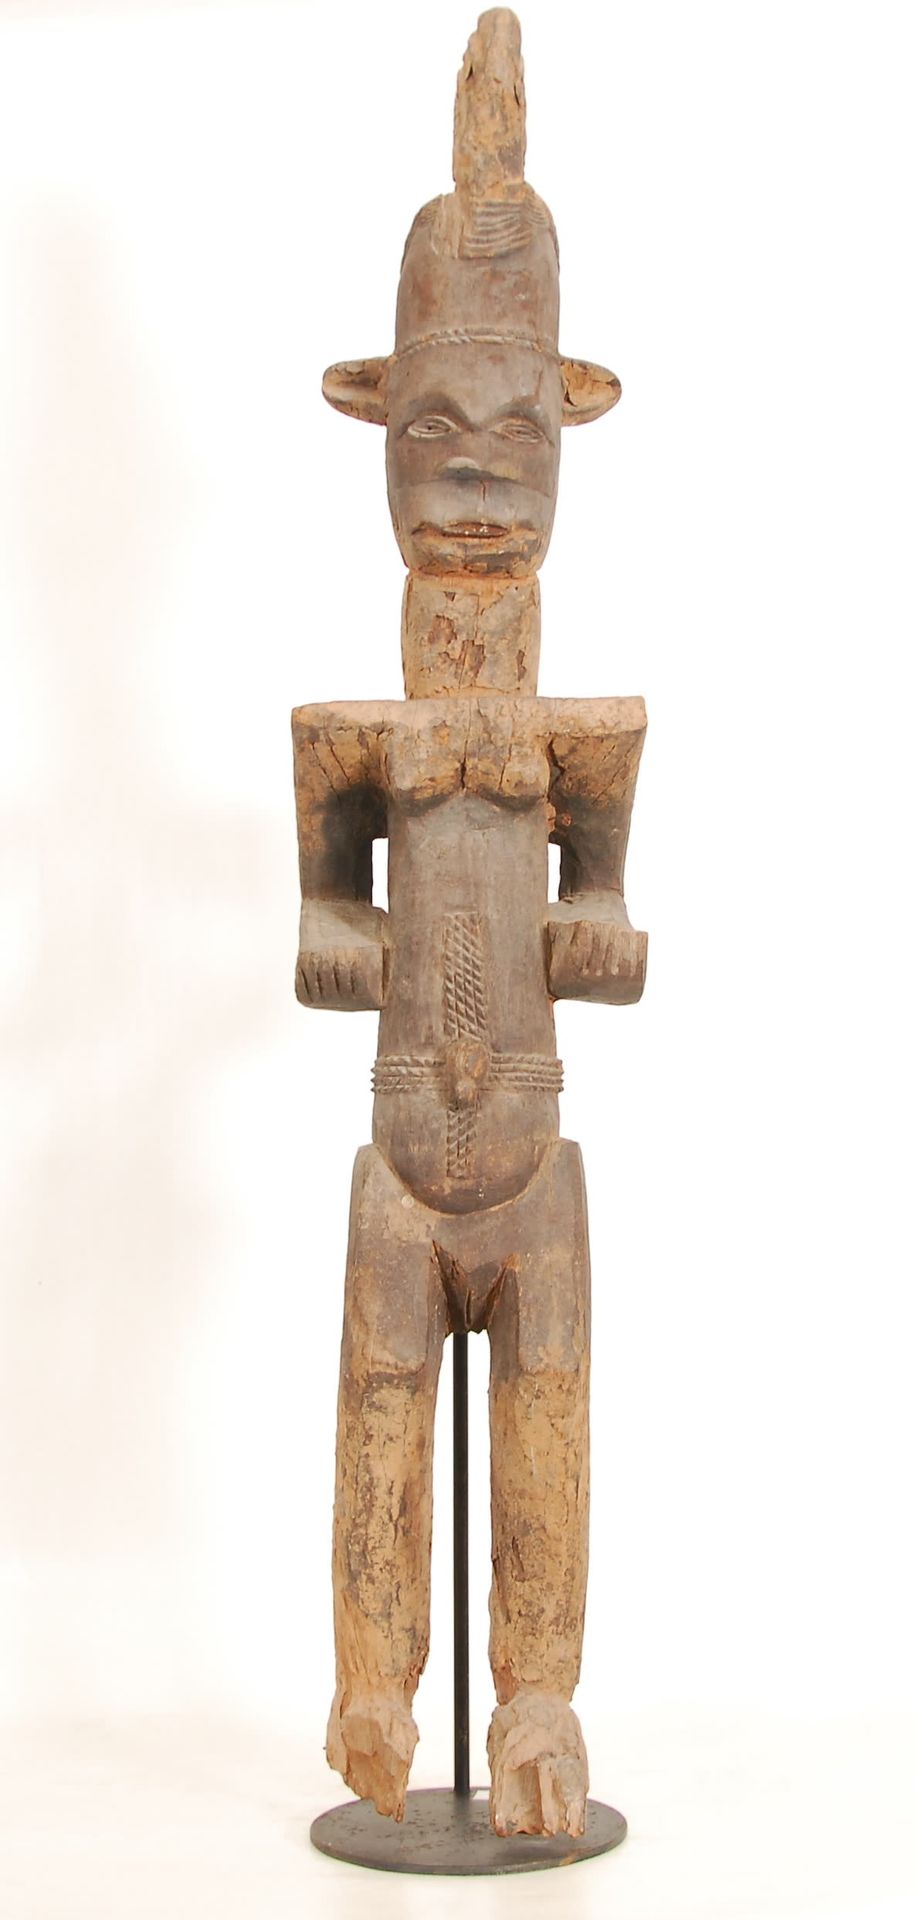 Afrique - Africa Ibo figure
Sculpted wood. Nigeria.
H. 129 cm.
Provenance: ancie&hellip;